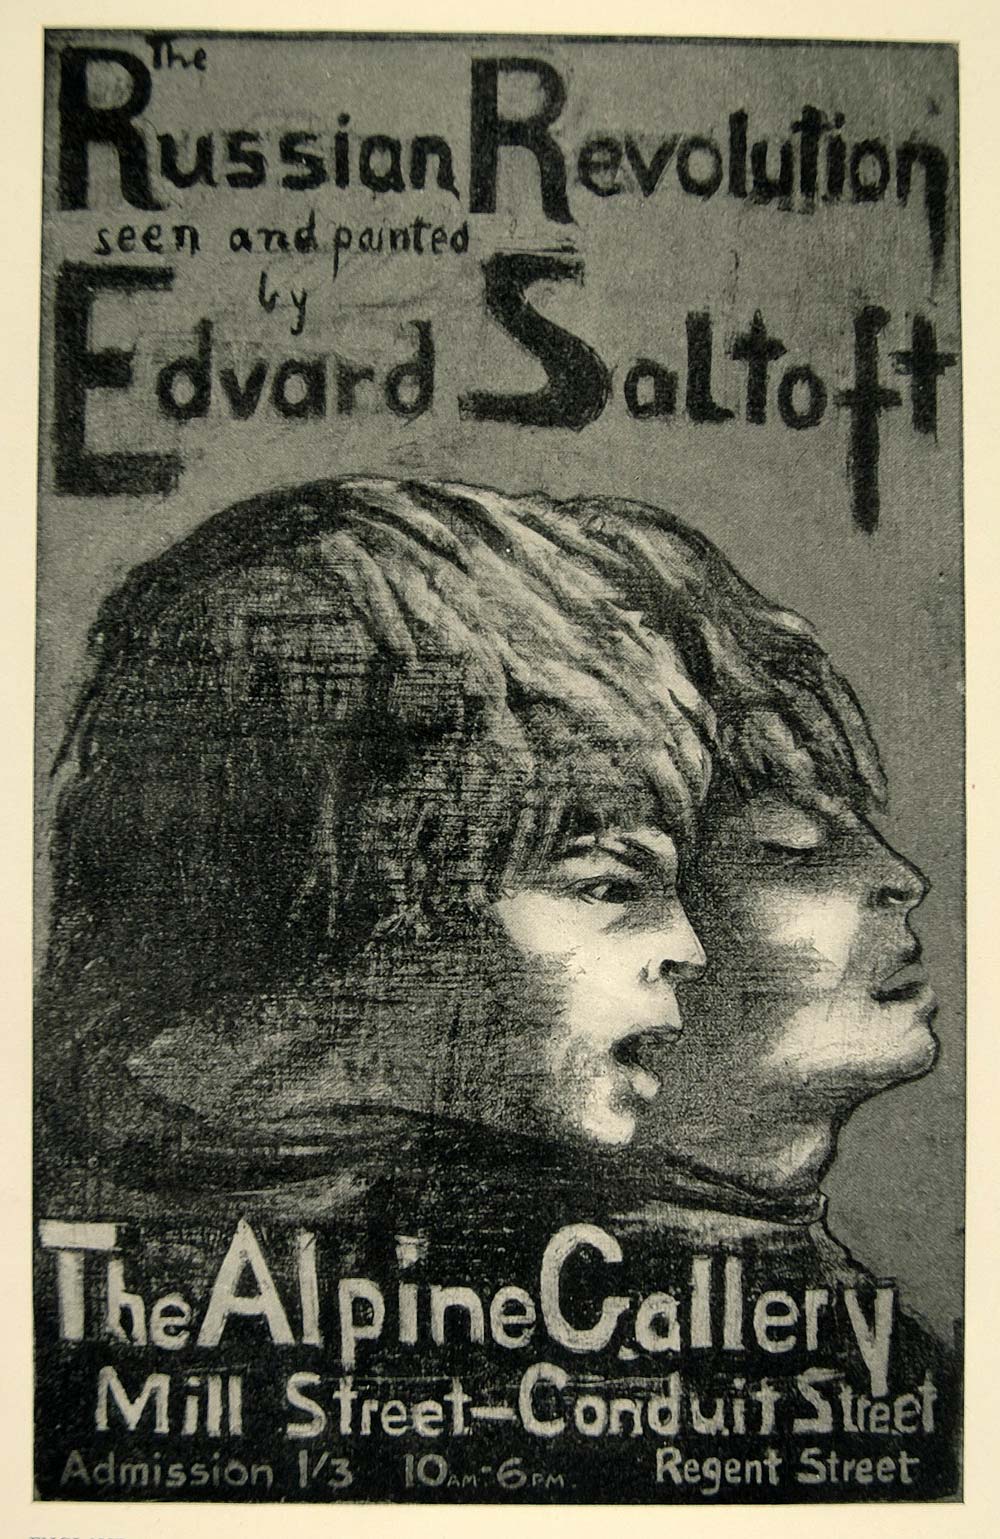 1924 Print Edvard Saltoft Poster Art Russian Revolution Alpine Gallery London